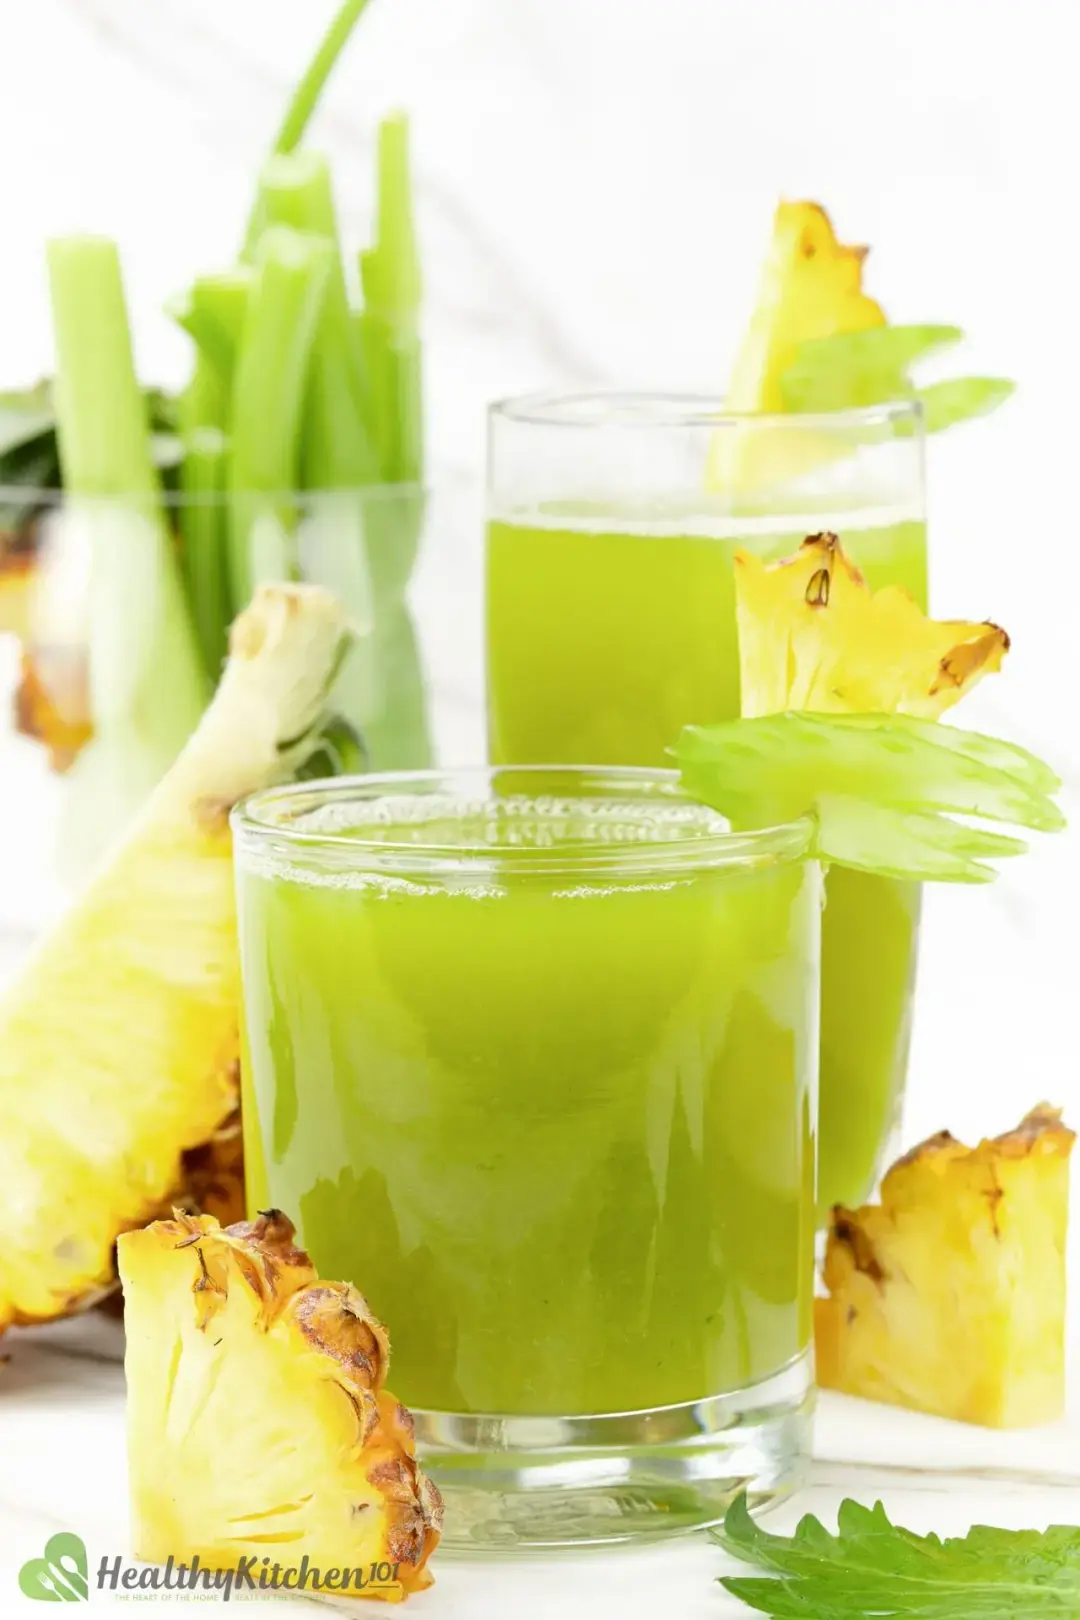 How Long Does Pineapple Celery Juice Last